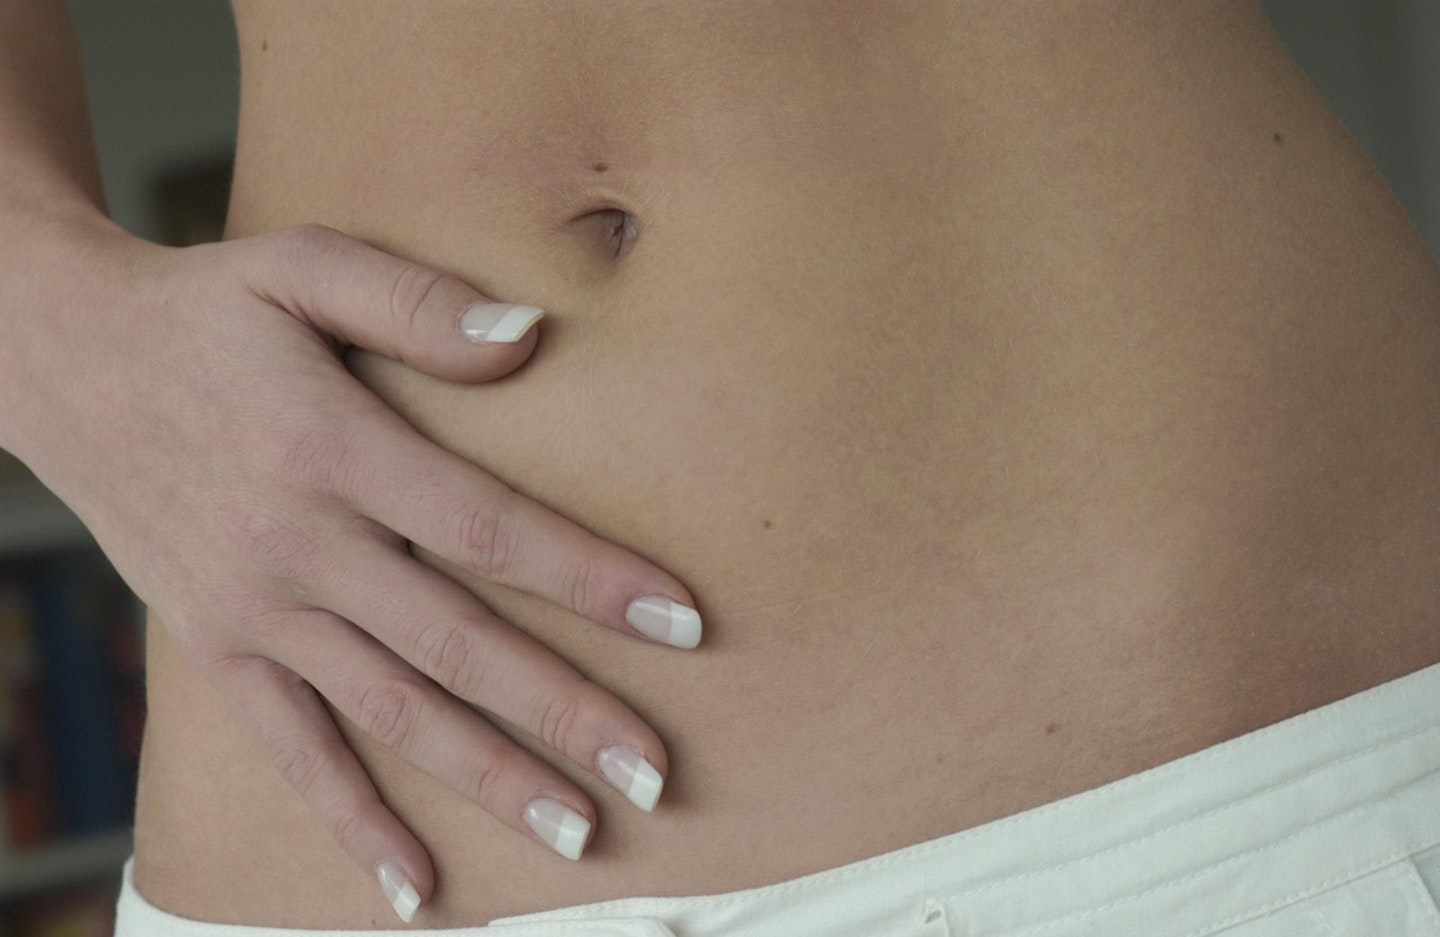 Ectopic pregnancies can happen to 1 in 80 pregnant women